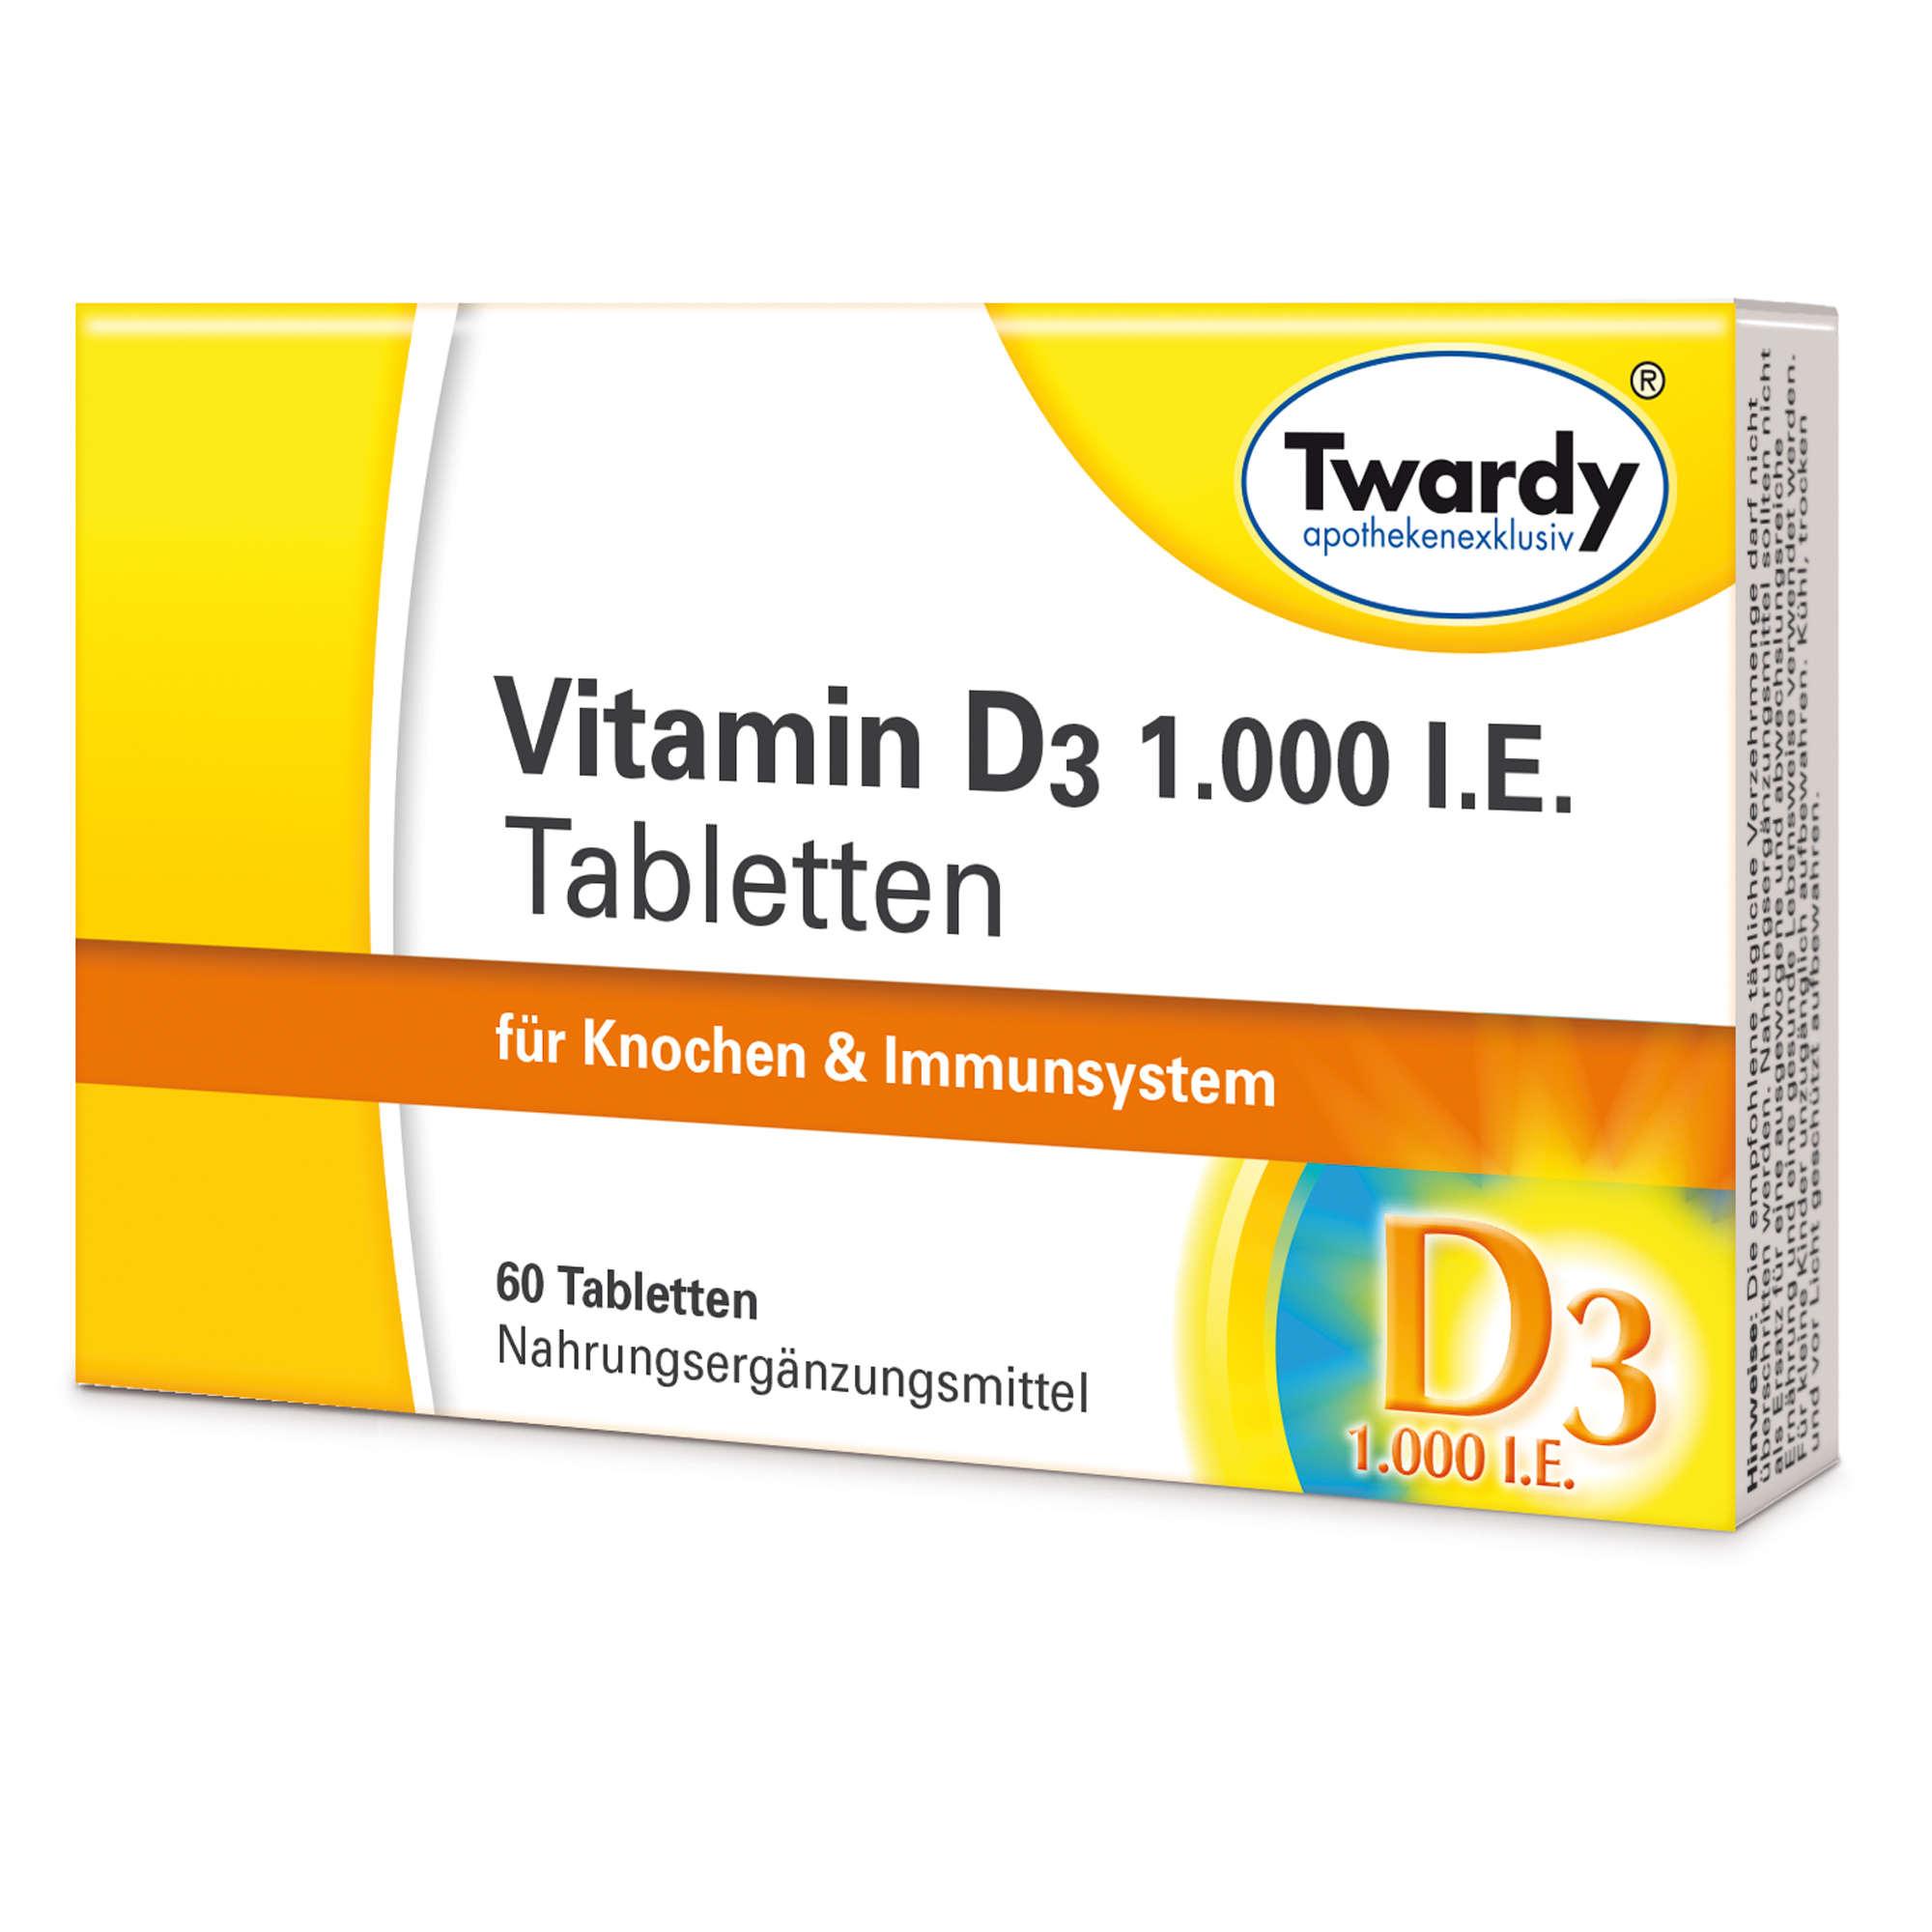 Vitamin D3 1.000 I.E. Tabletten